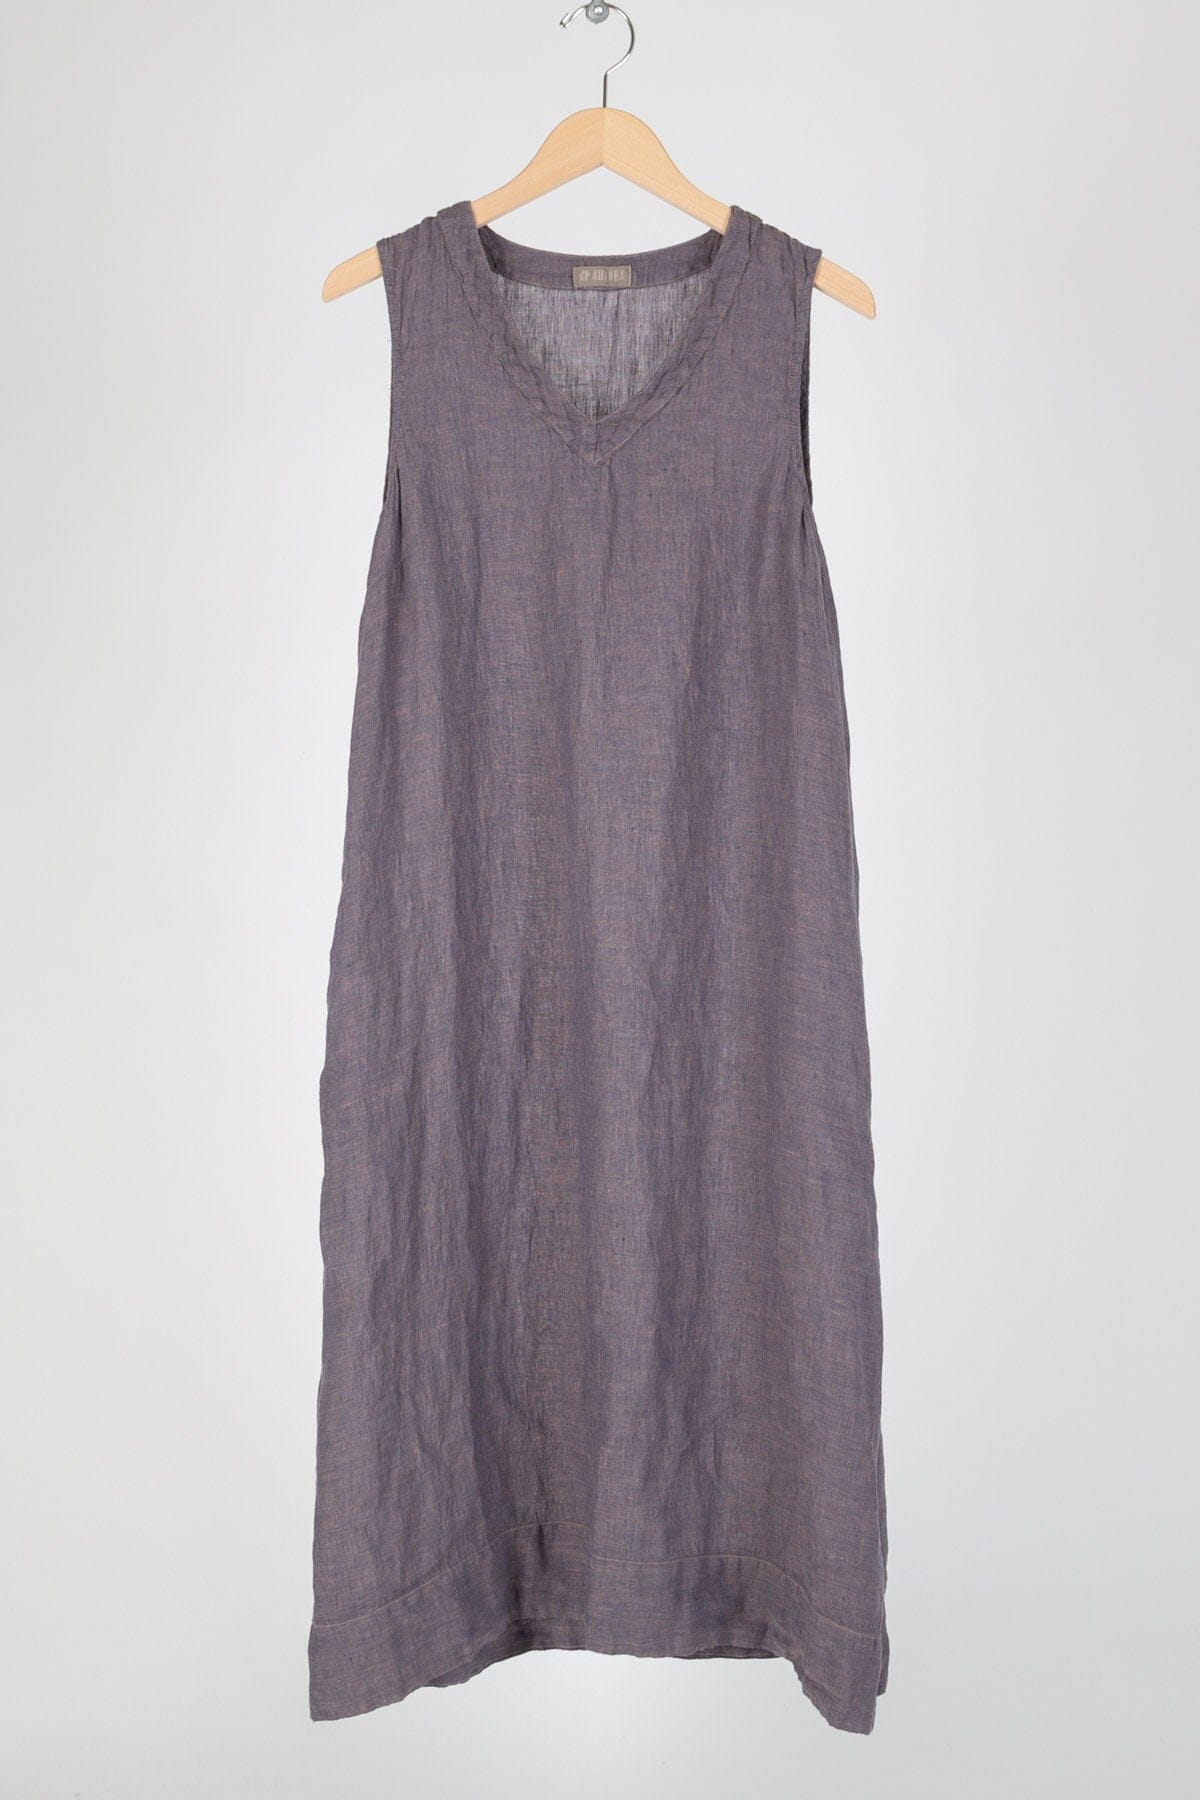 Tasha - Iridescent Linen S90 - Iridescent Sale Dresses/Skirts CP Shades stone 162